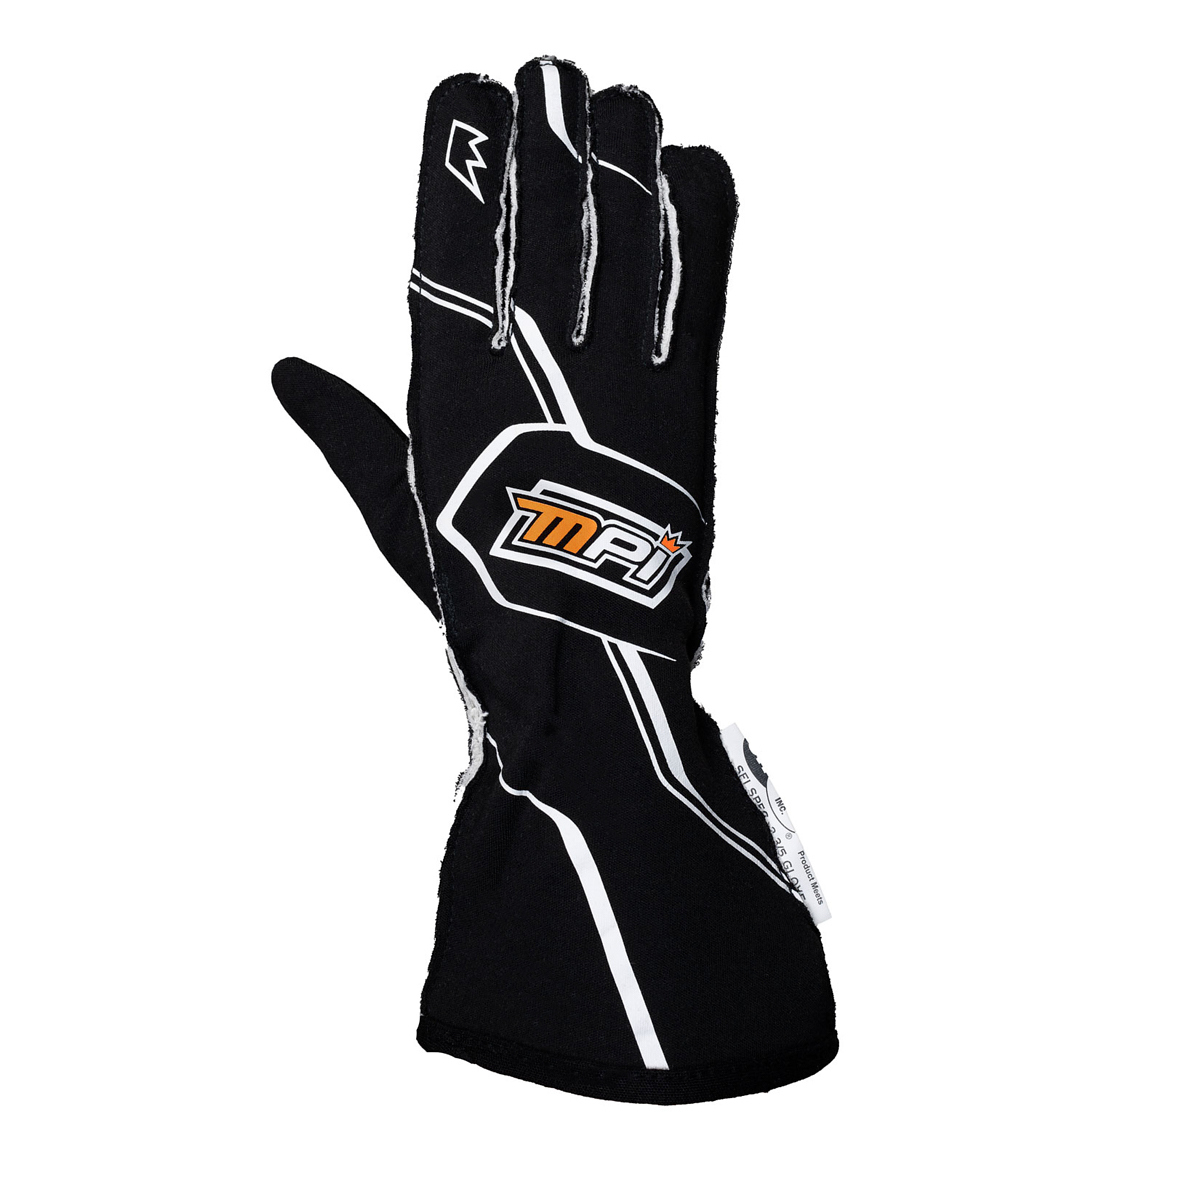 MPI USA MPI-GL-B-L - Gloves, Driving, SFI 3.3/5, Double Layer, Nomex, Padded Palm, Black / White, Large, Pair